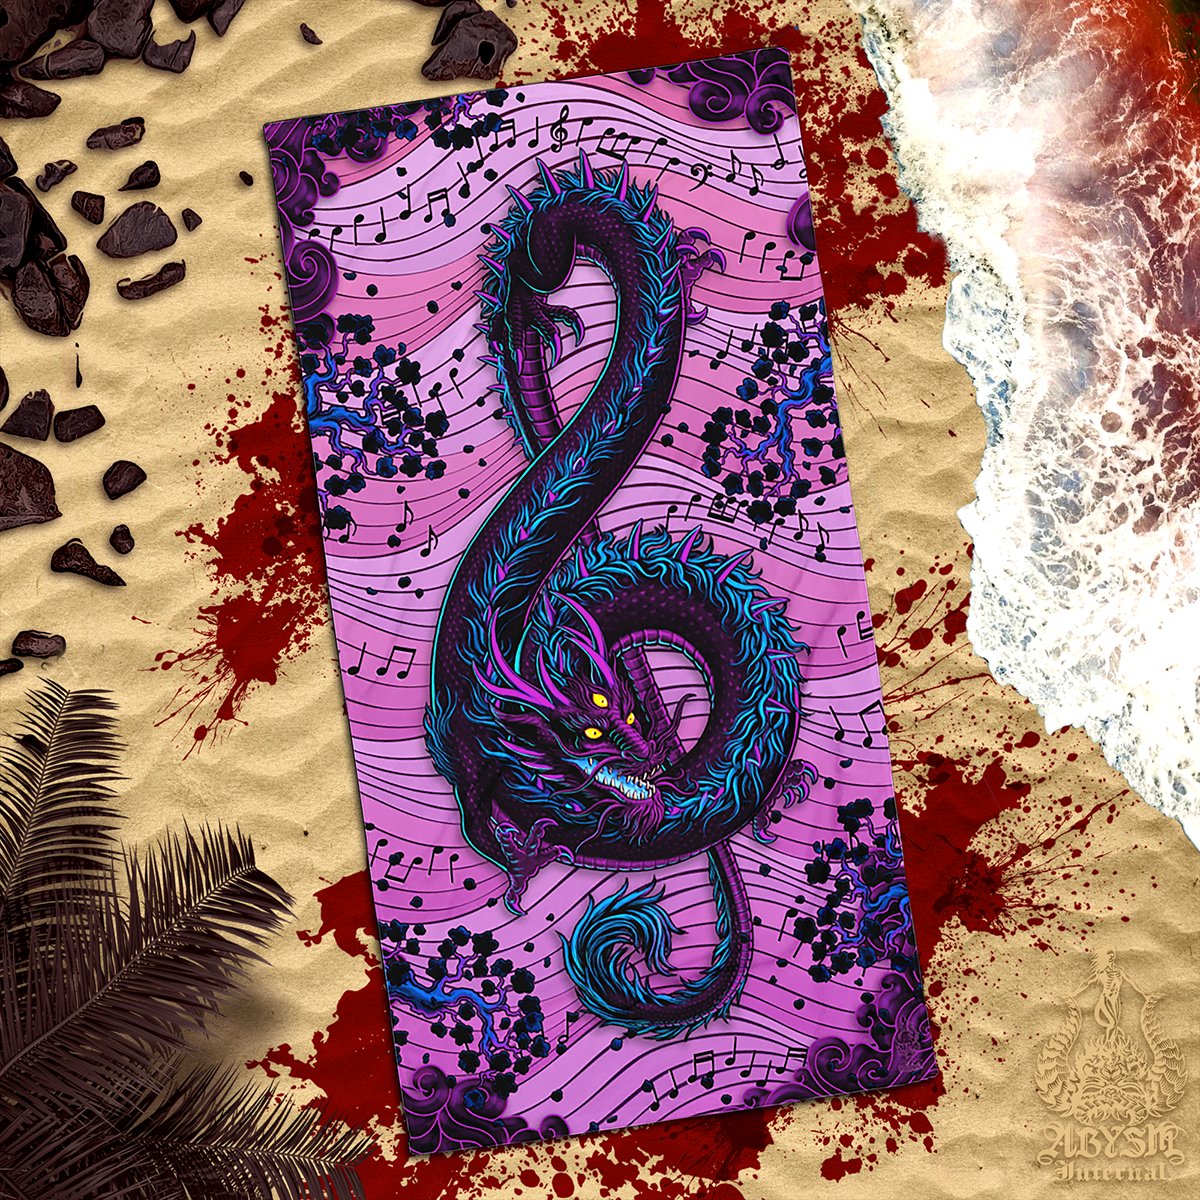 ALL Pastel Goth Beach Towel Designs, Black Purple Whimsigoth Art, Cool Gift Idea for Surfers - Octopus, Ankh, Lion, Kitsune, Medusa, Music Dragon, Oni, Spider, Skull, Daruma, Viking, Tree of Life, 13 Designs - Abysm Internal